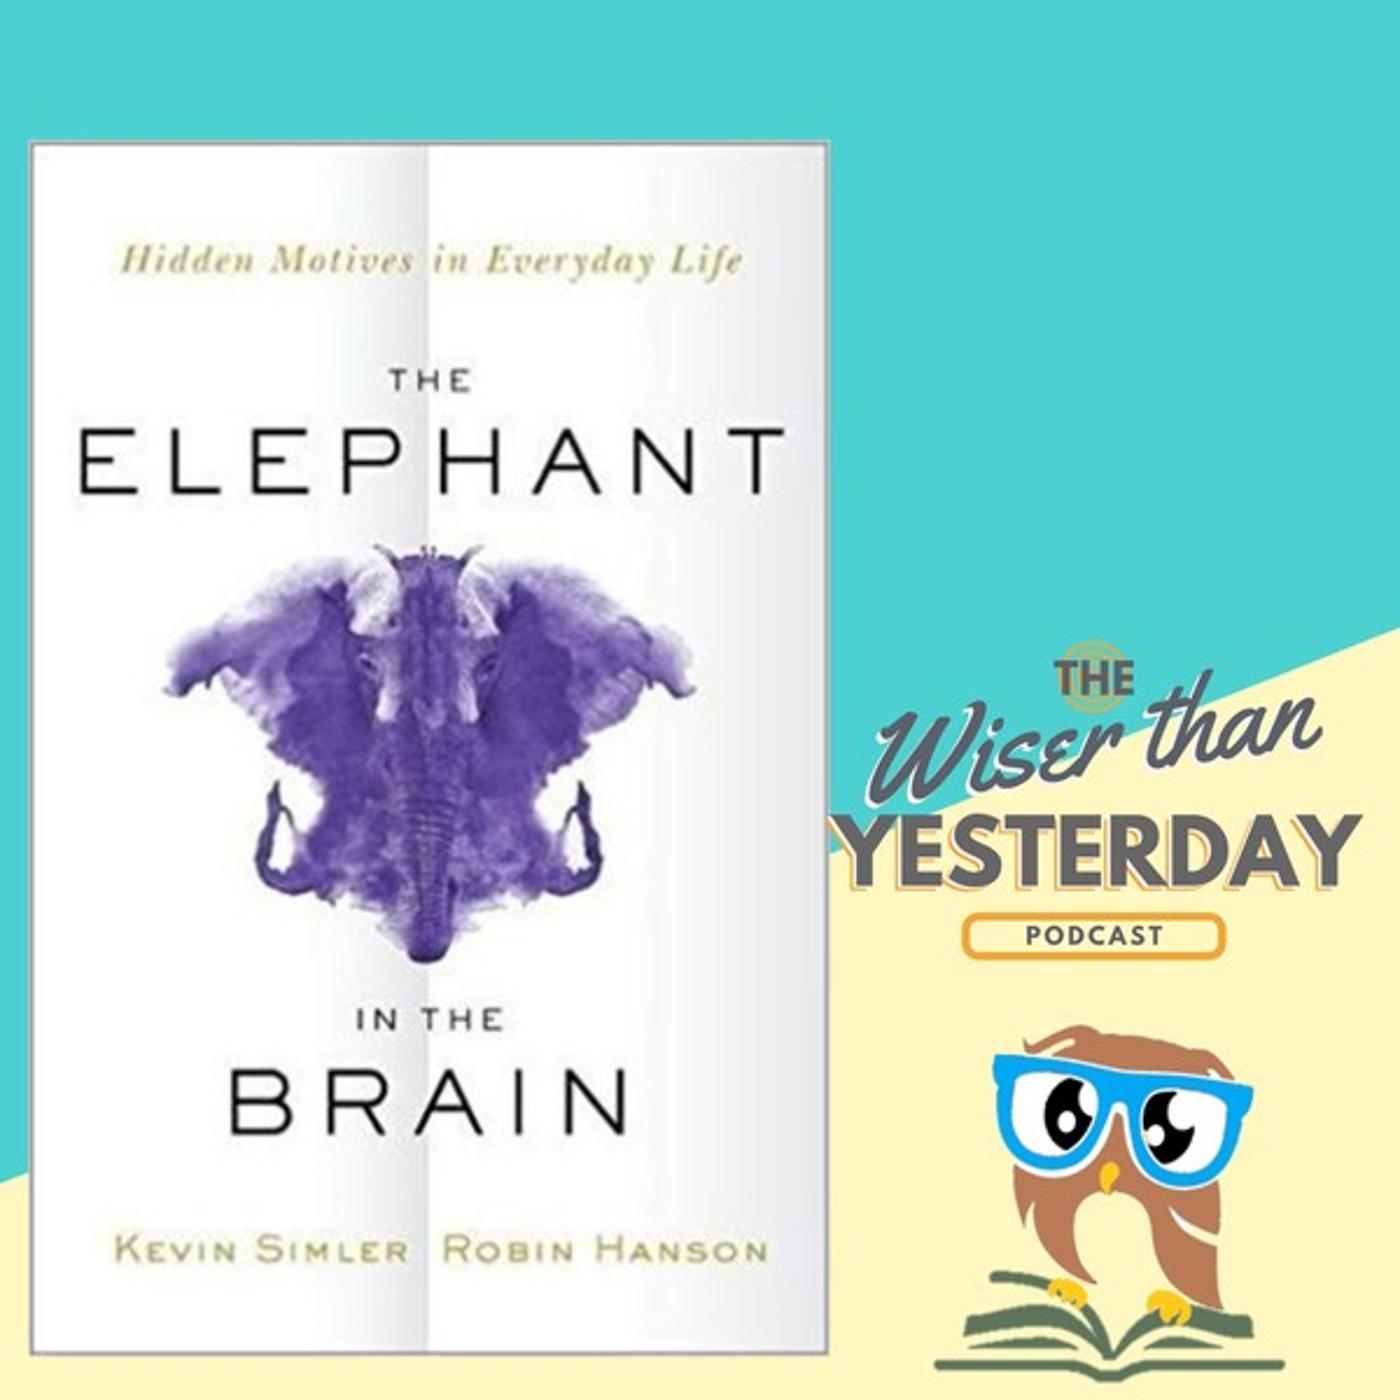 2. The Elephant in the Brain - Kevin Simler & Robin Hanson